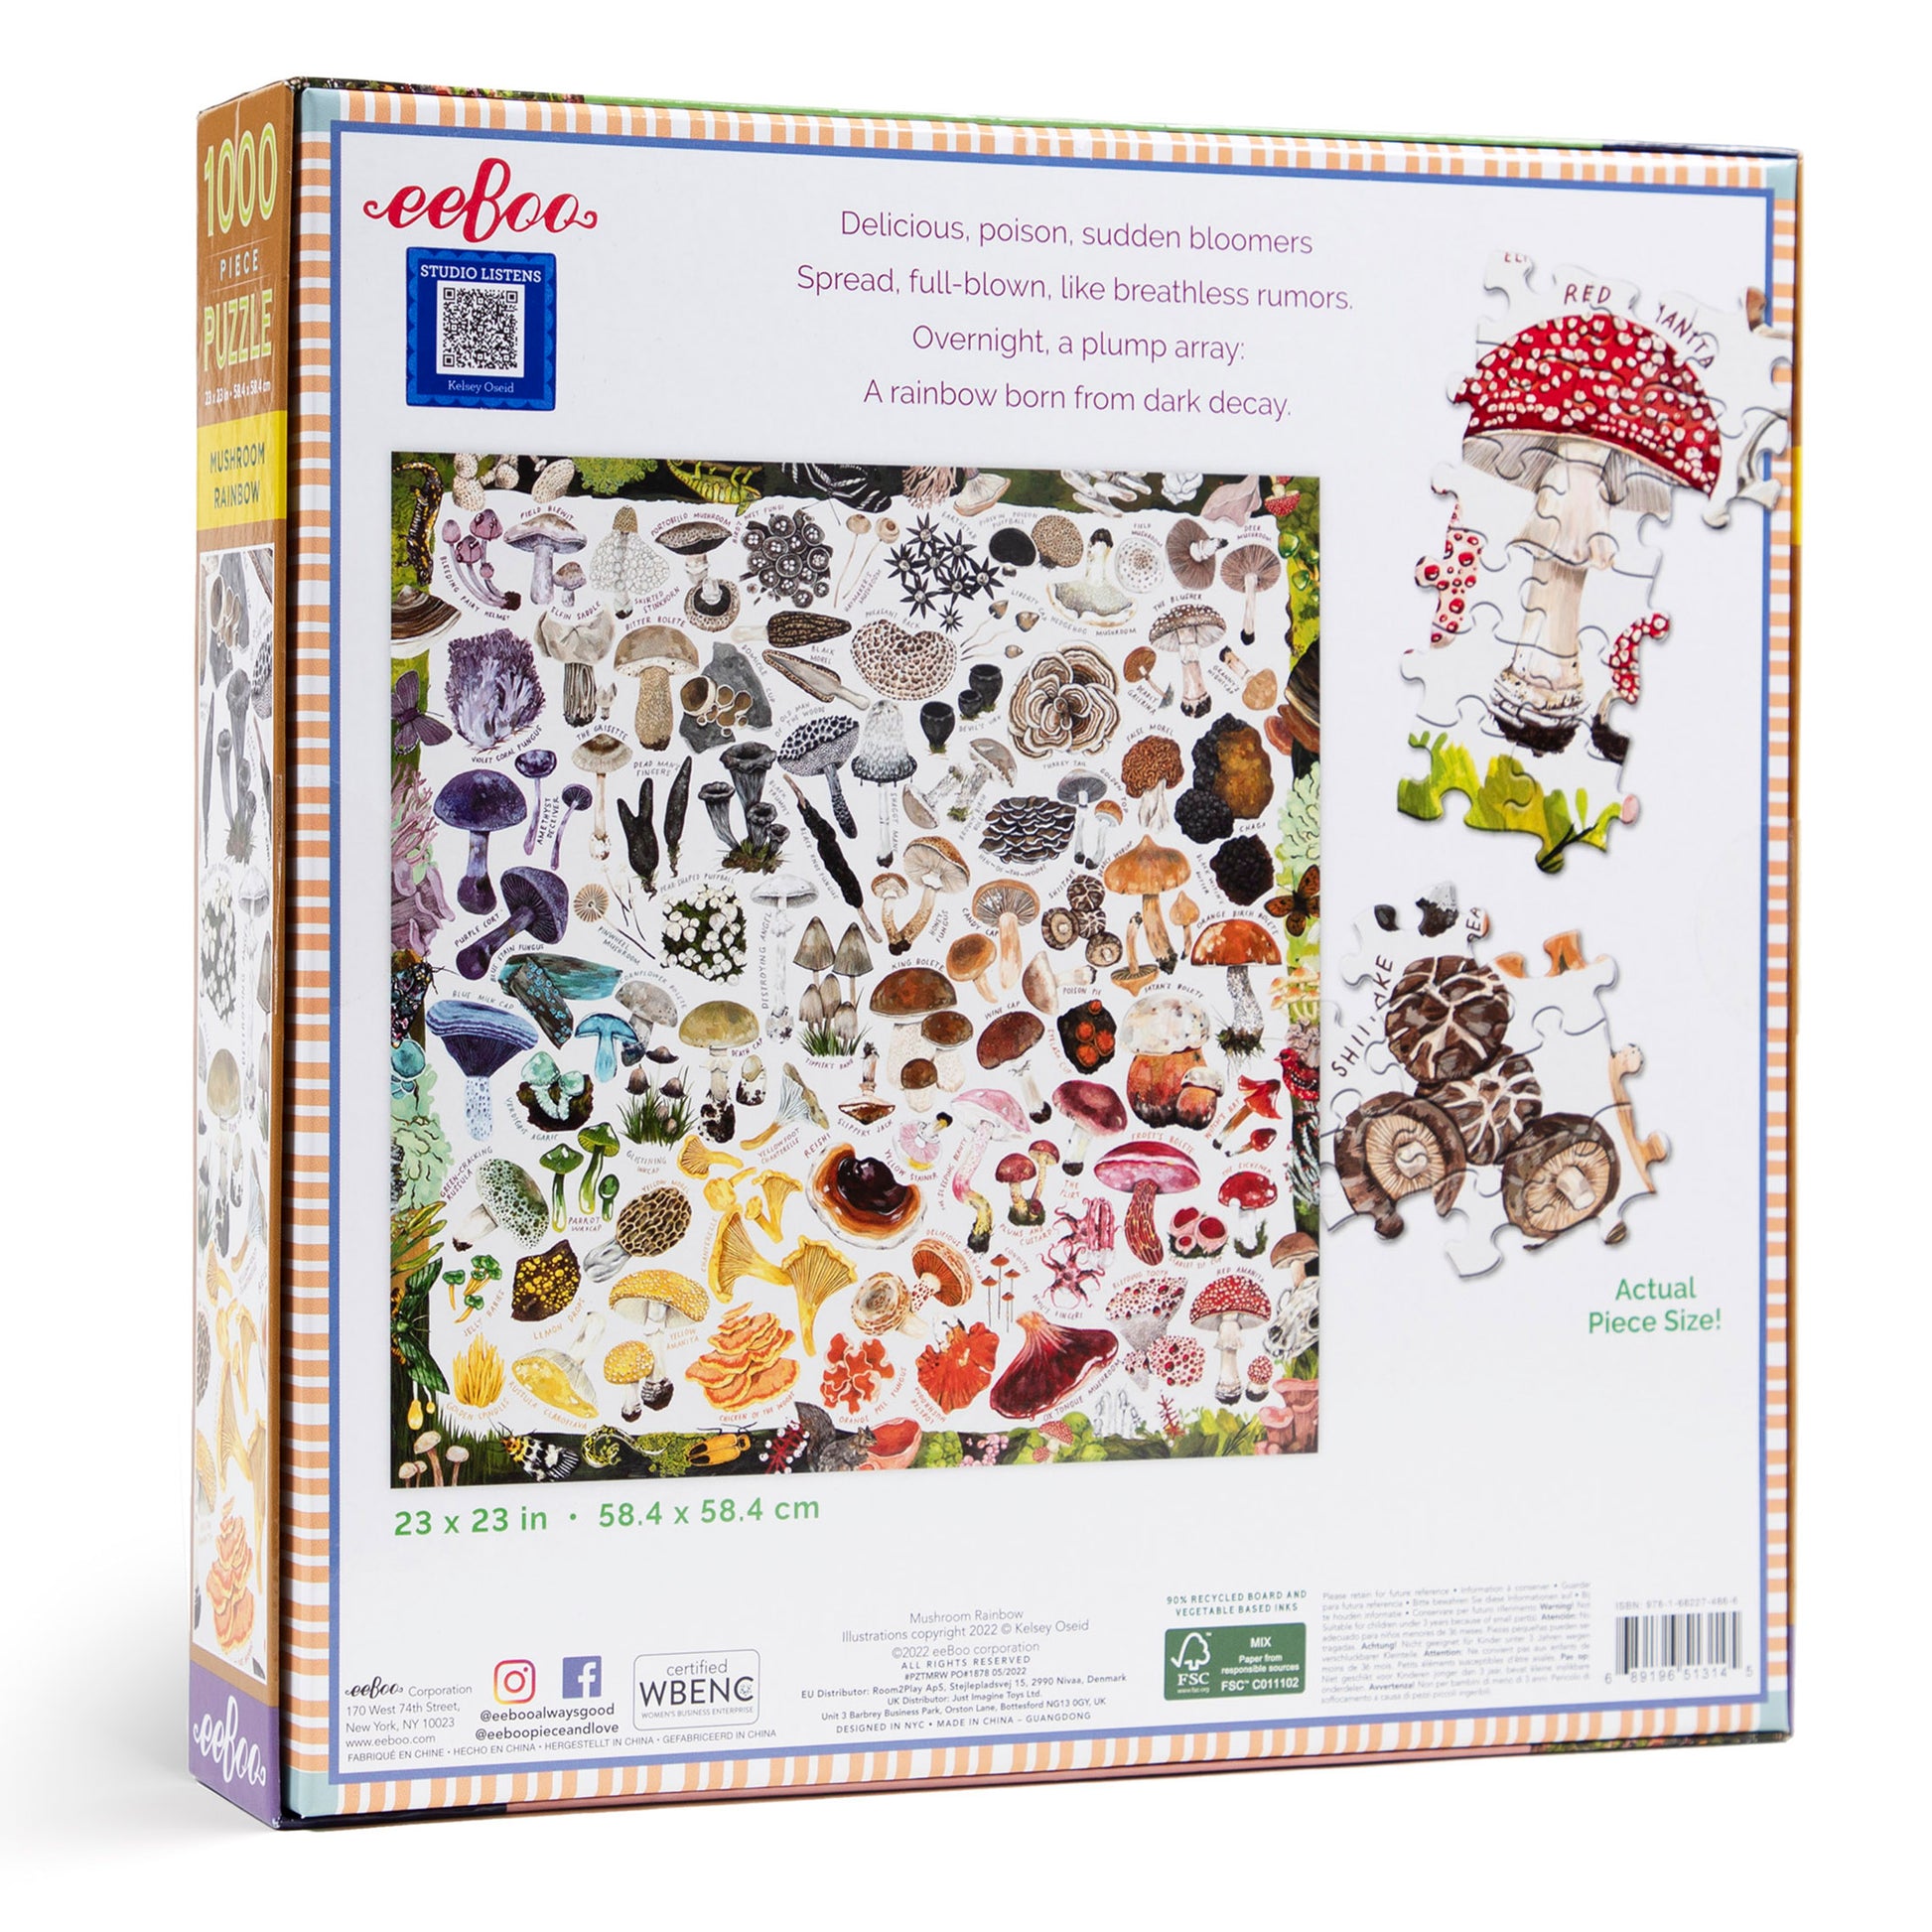 Mushroom Rainbow 1000 Piece Jigsaw Puzzle eeBoo Gifts for Nature Lovers